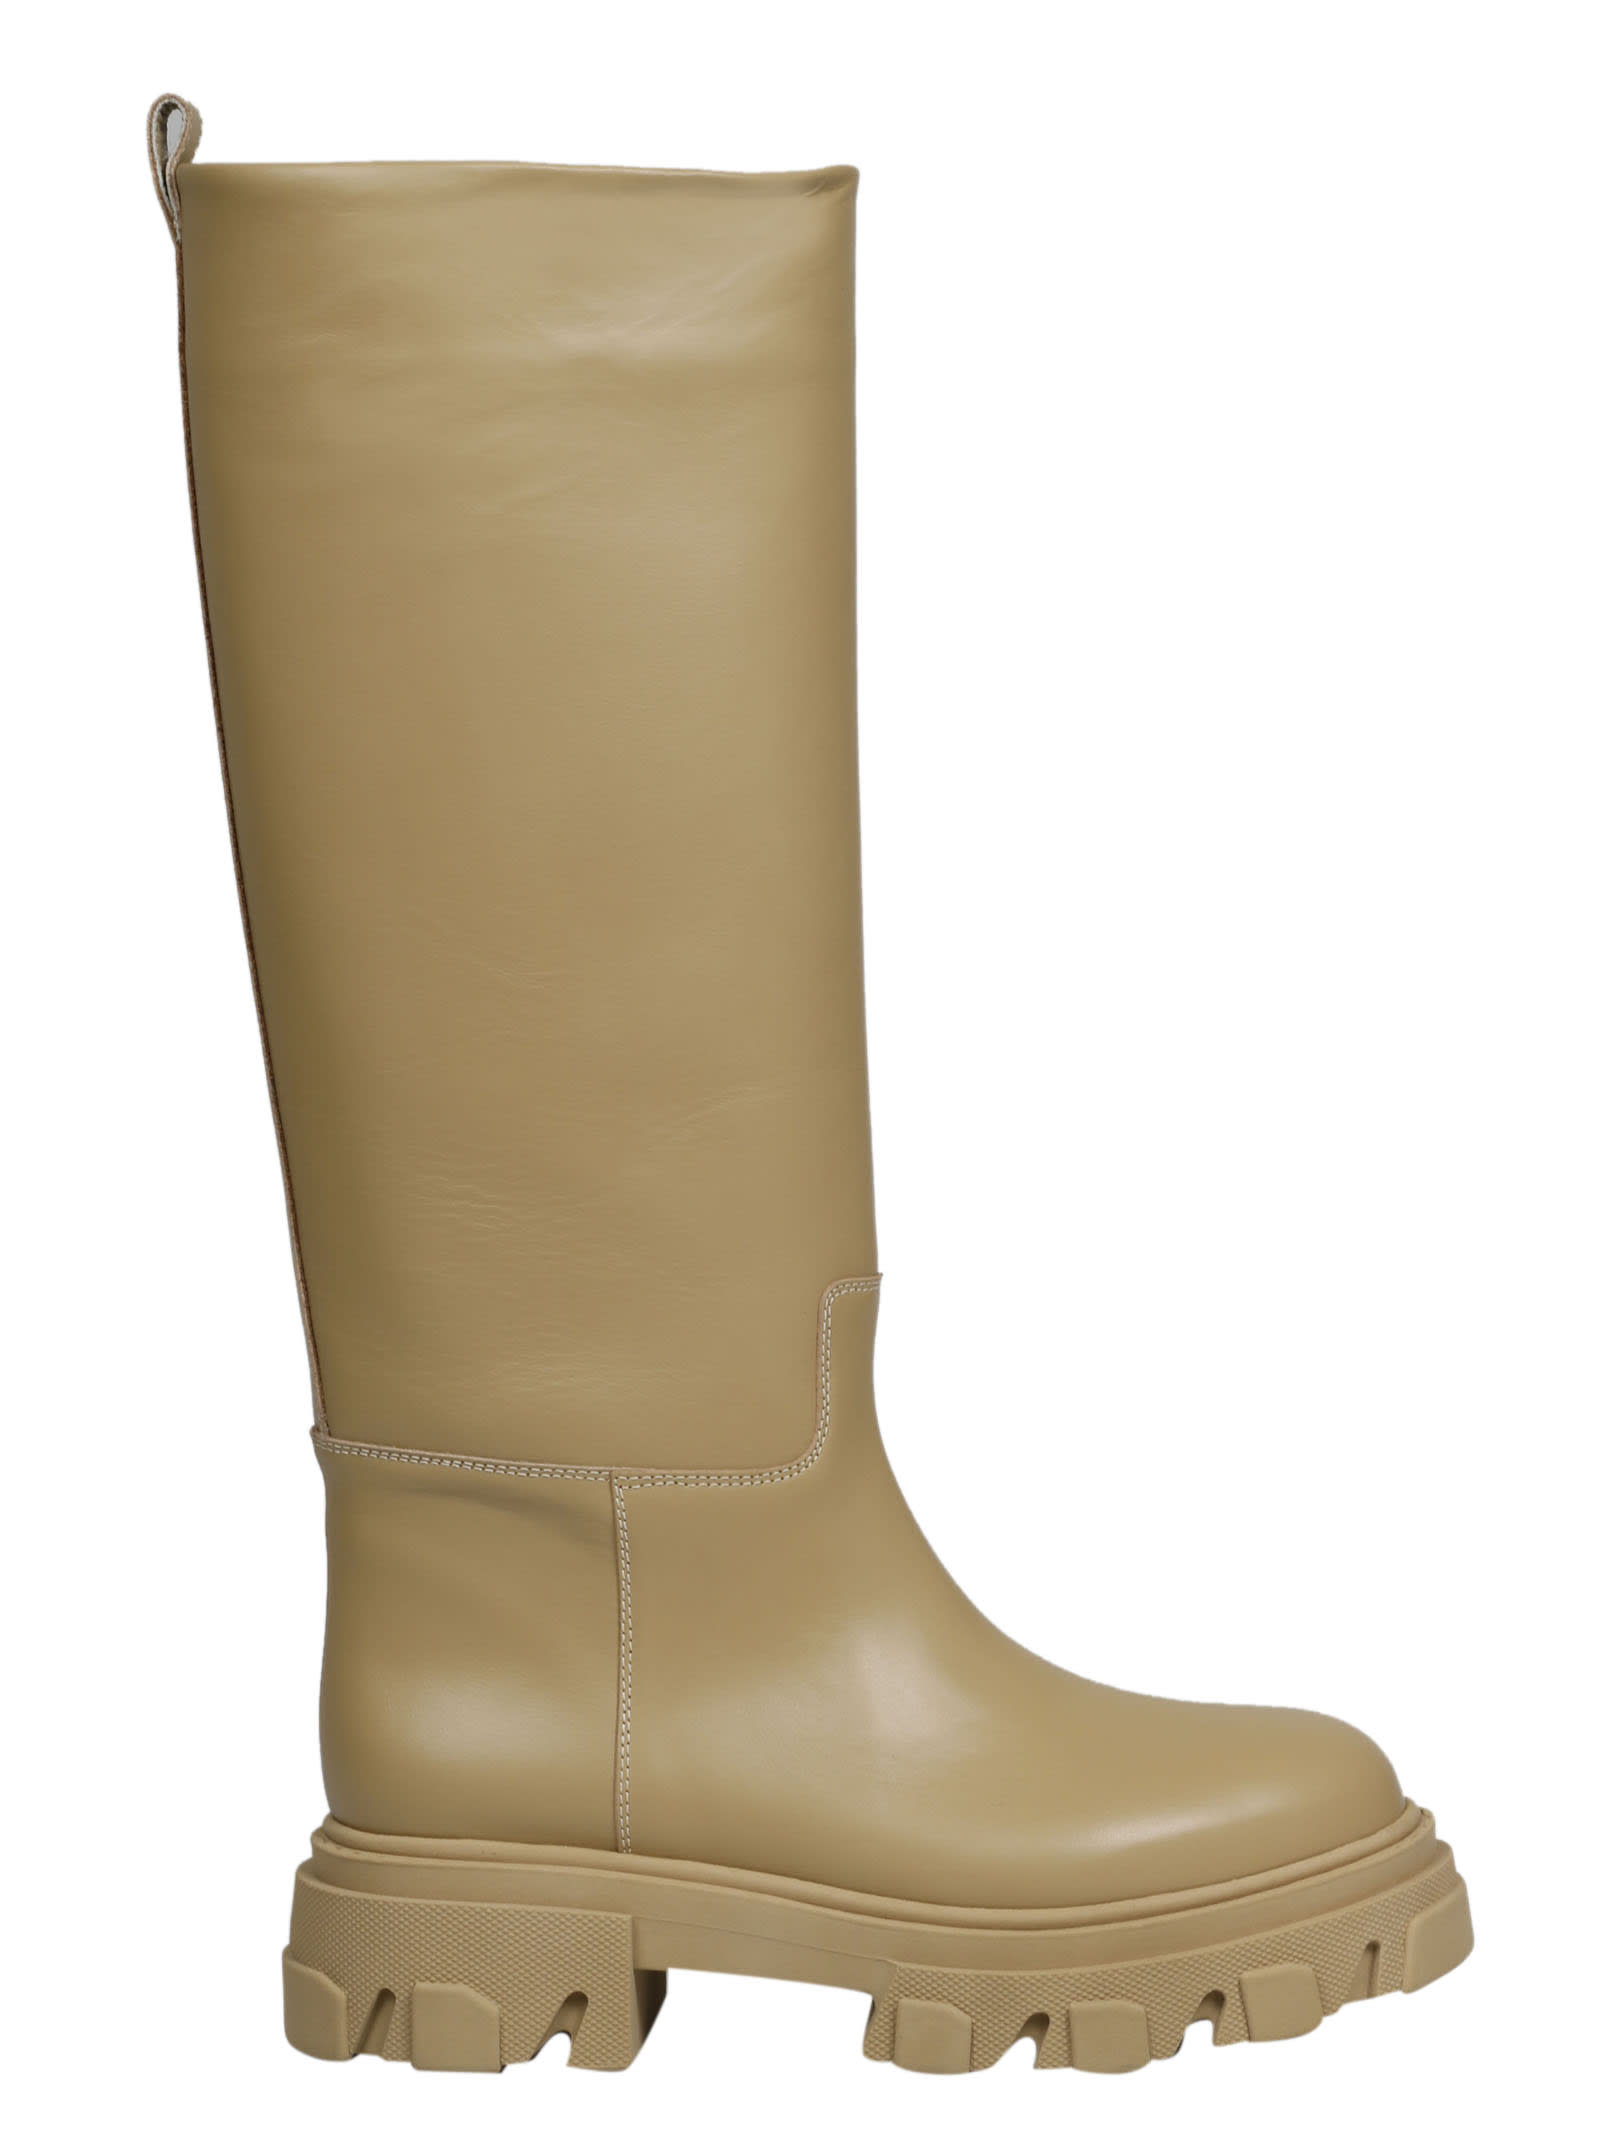 Gia X Pernille Teisbaek Combat Boots